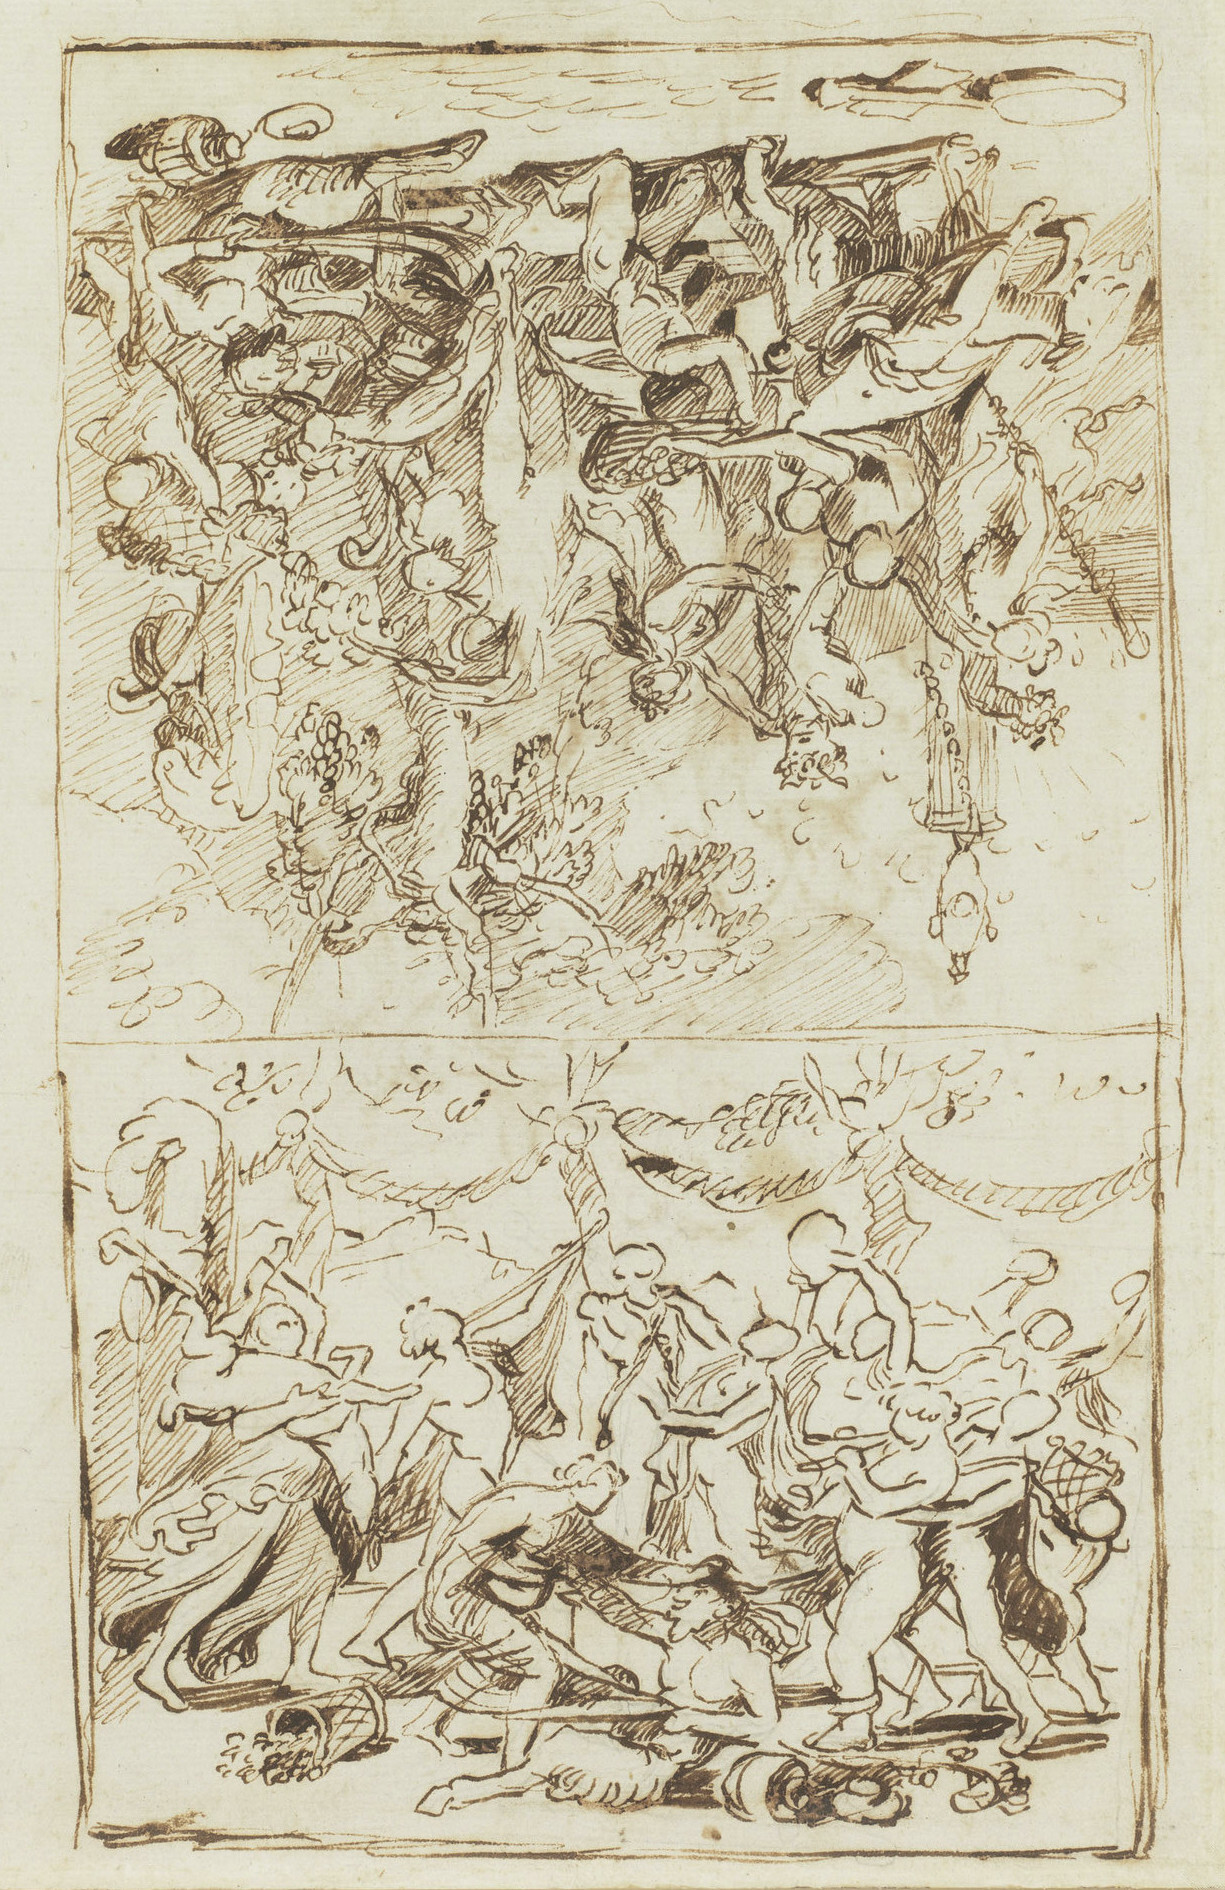 Nicholas-Poussin-Preparatory-study-for-The-Triumph-of-Pan-Verso-c-1635-36